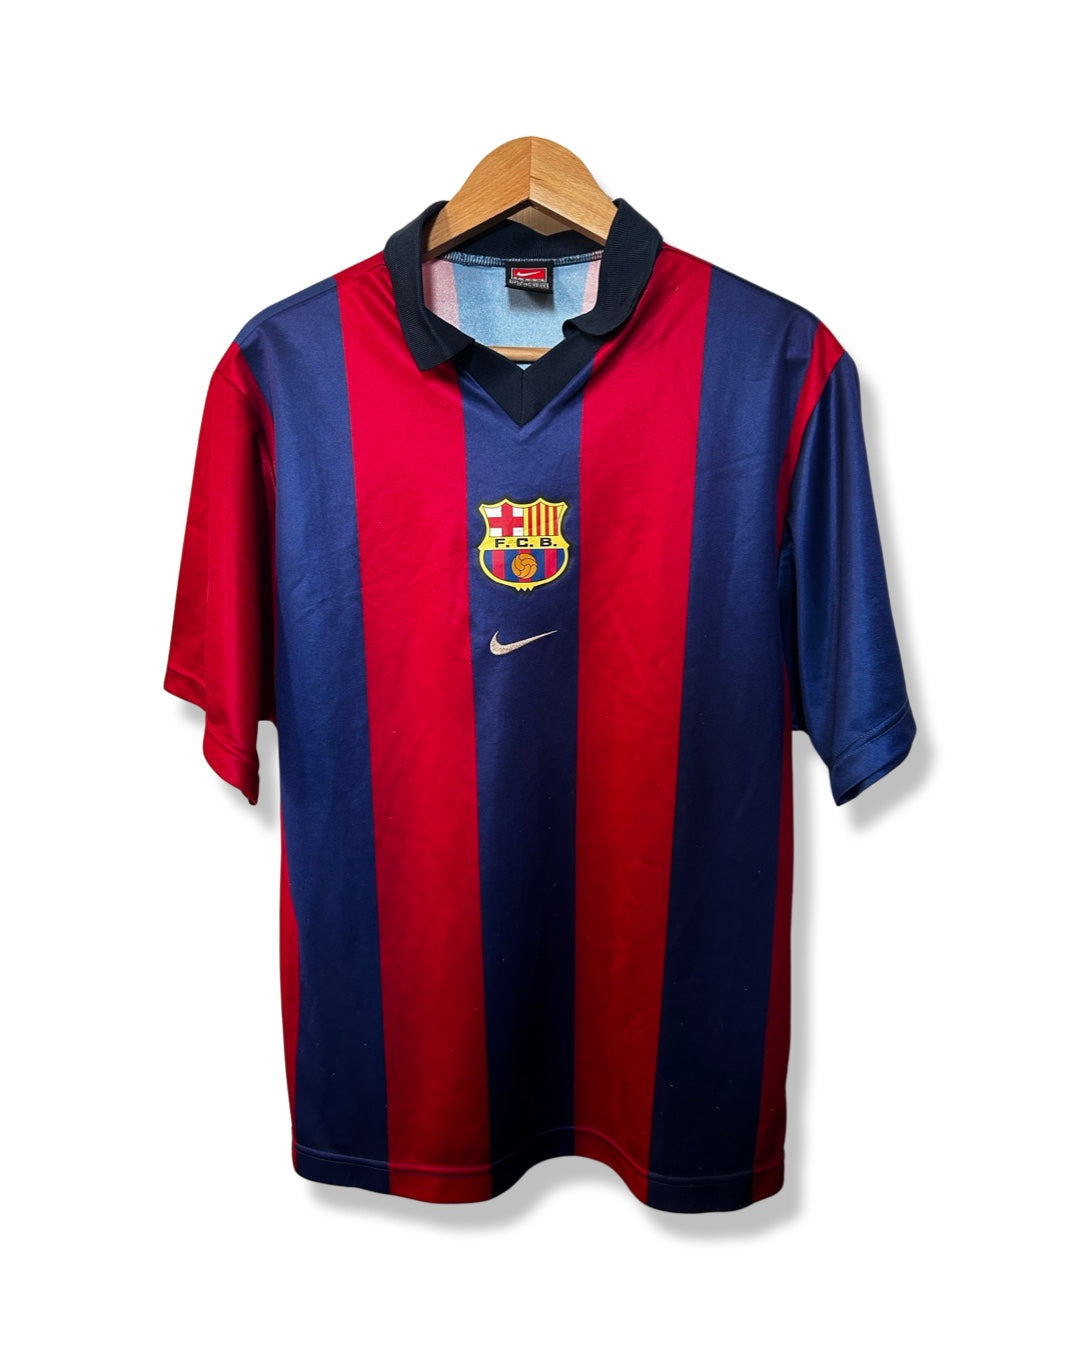 FC Barcelona 2001-02 Home Shirt, #10 Rivaldo - M